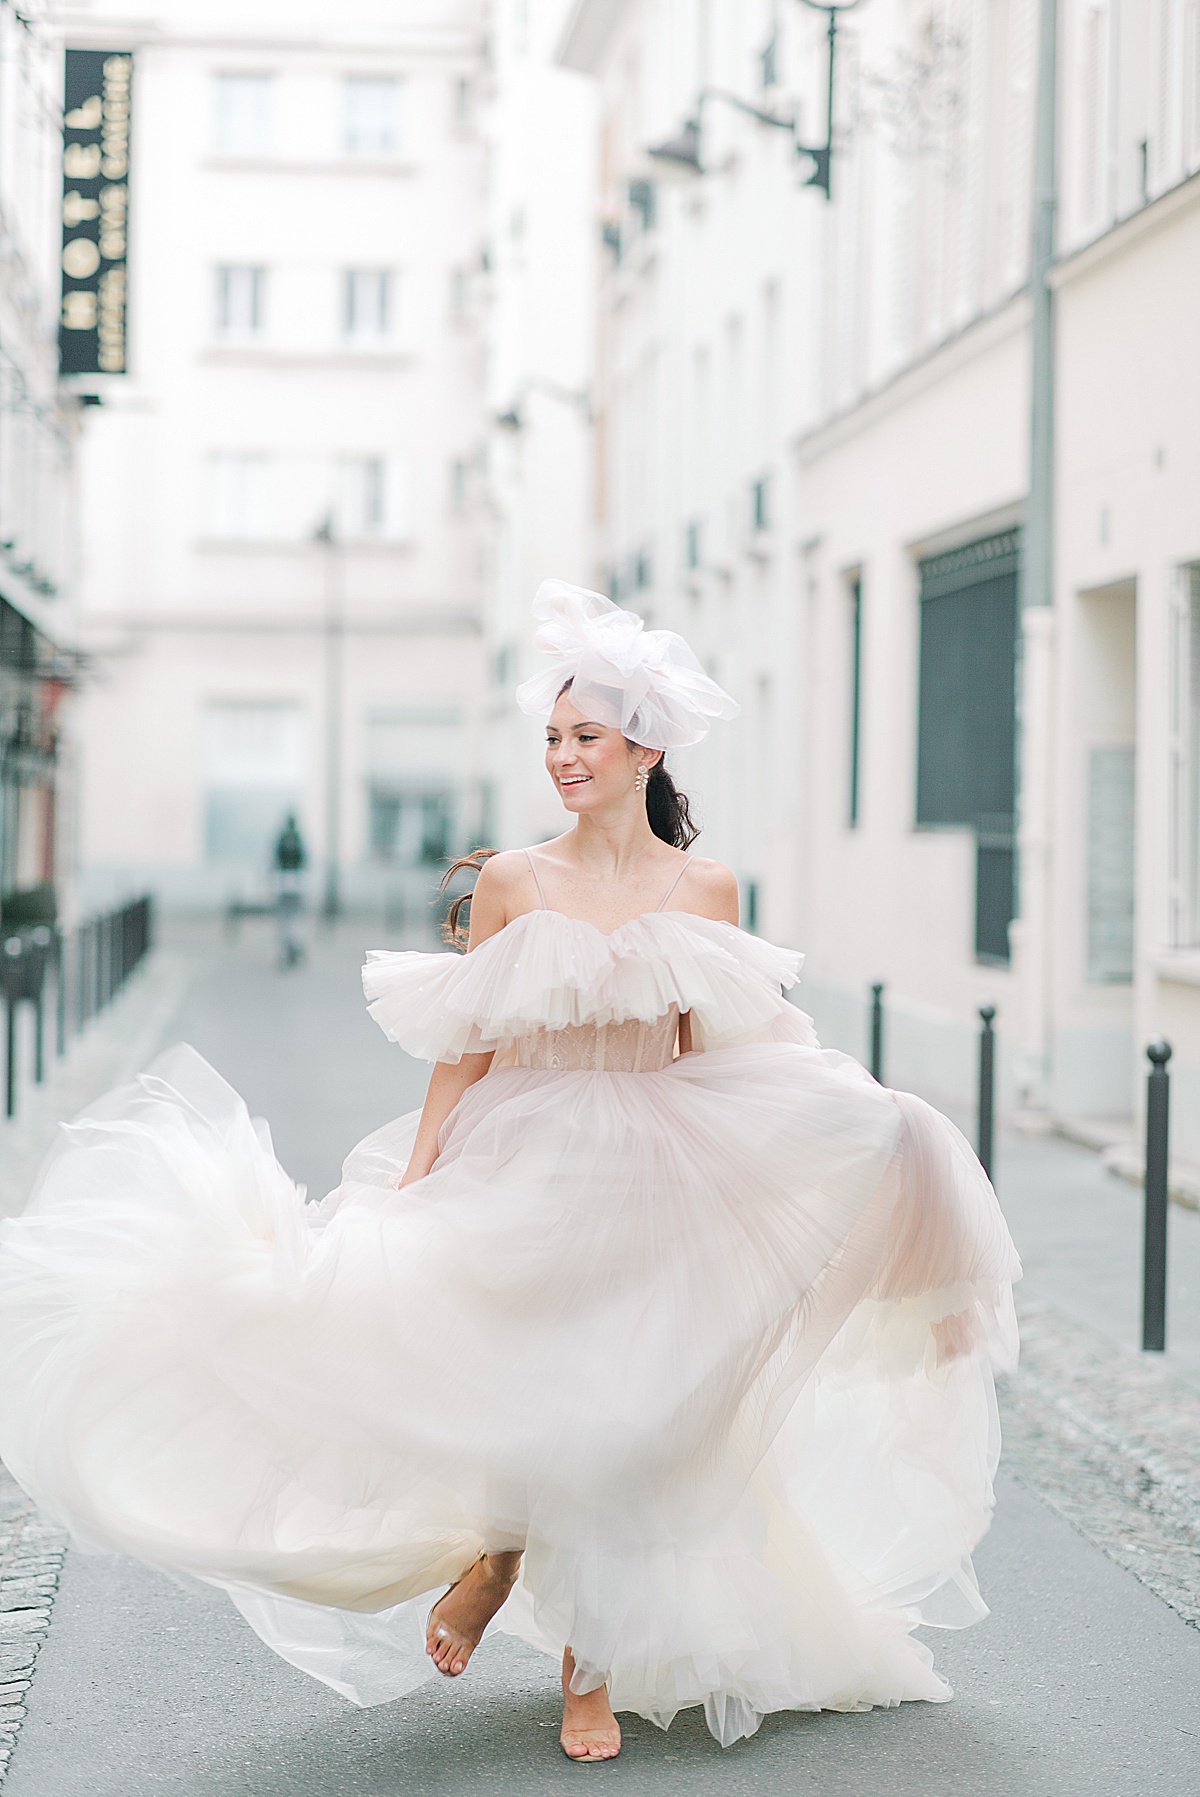 Paris Bridal Fashion Bride running down street Photo